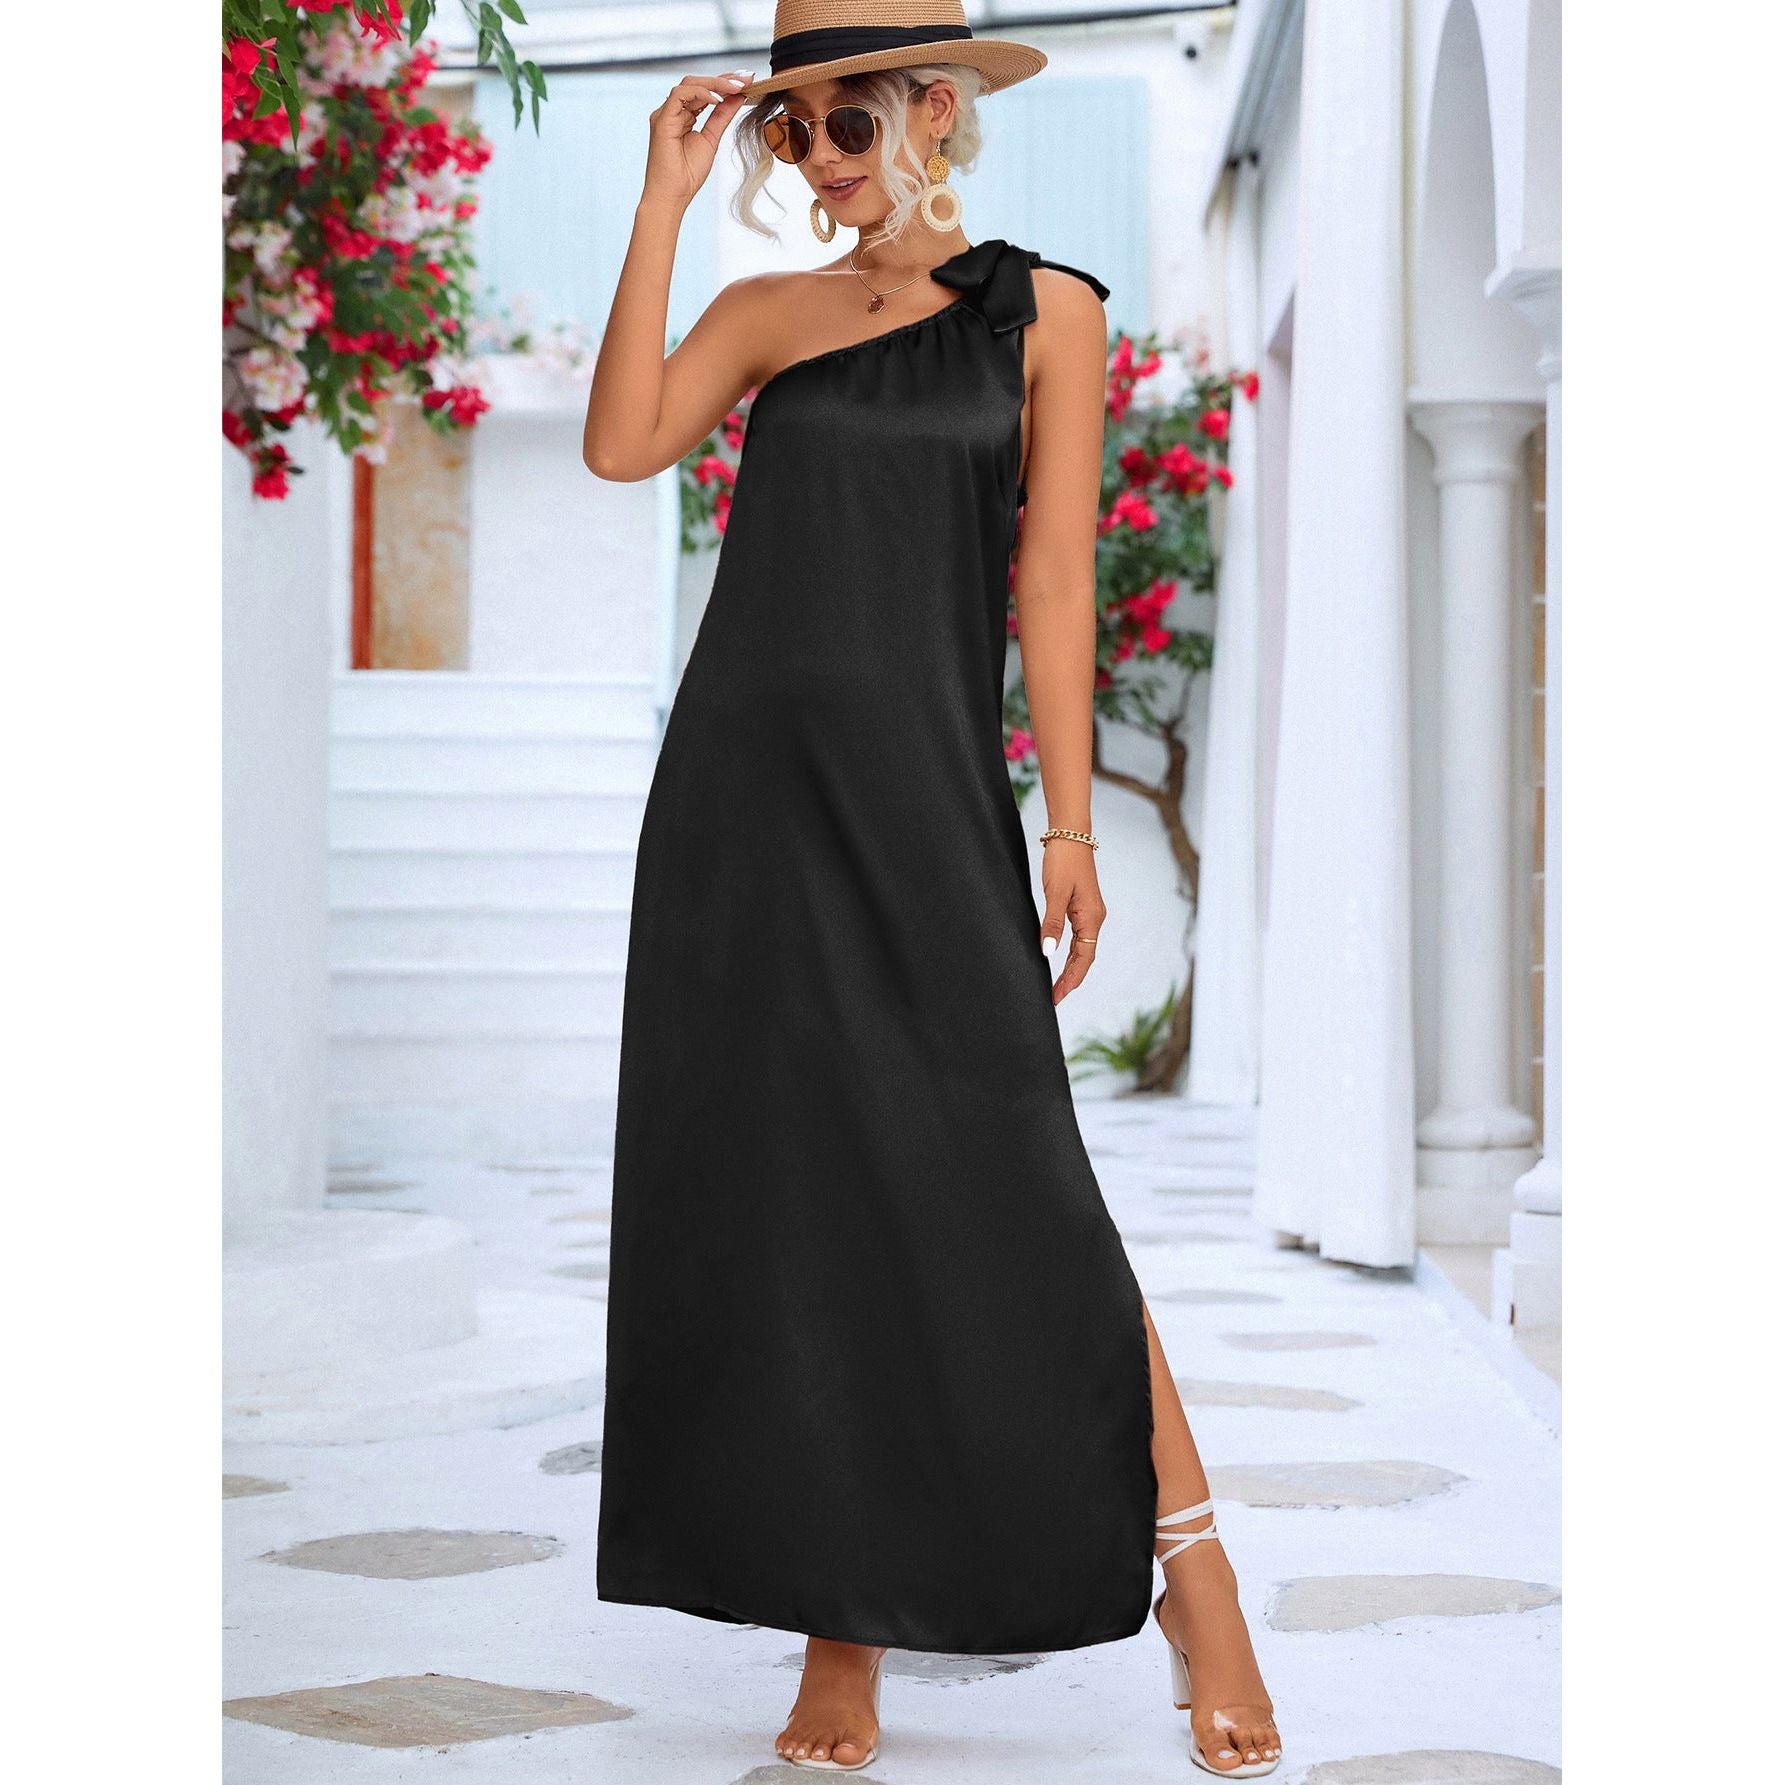 One-Shoulder Slit Maxi Dress - TiffanyzKlozet